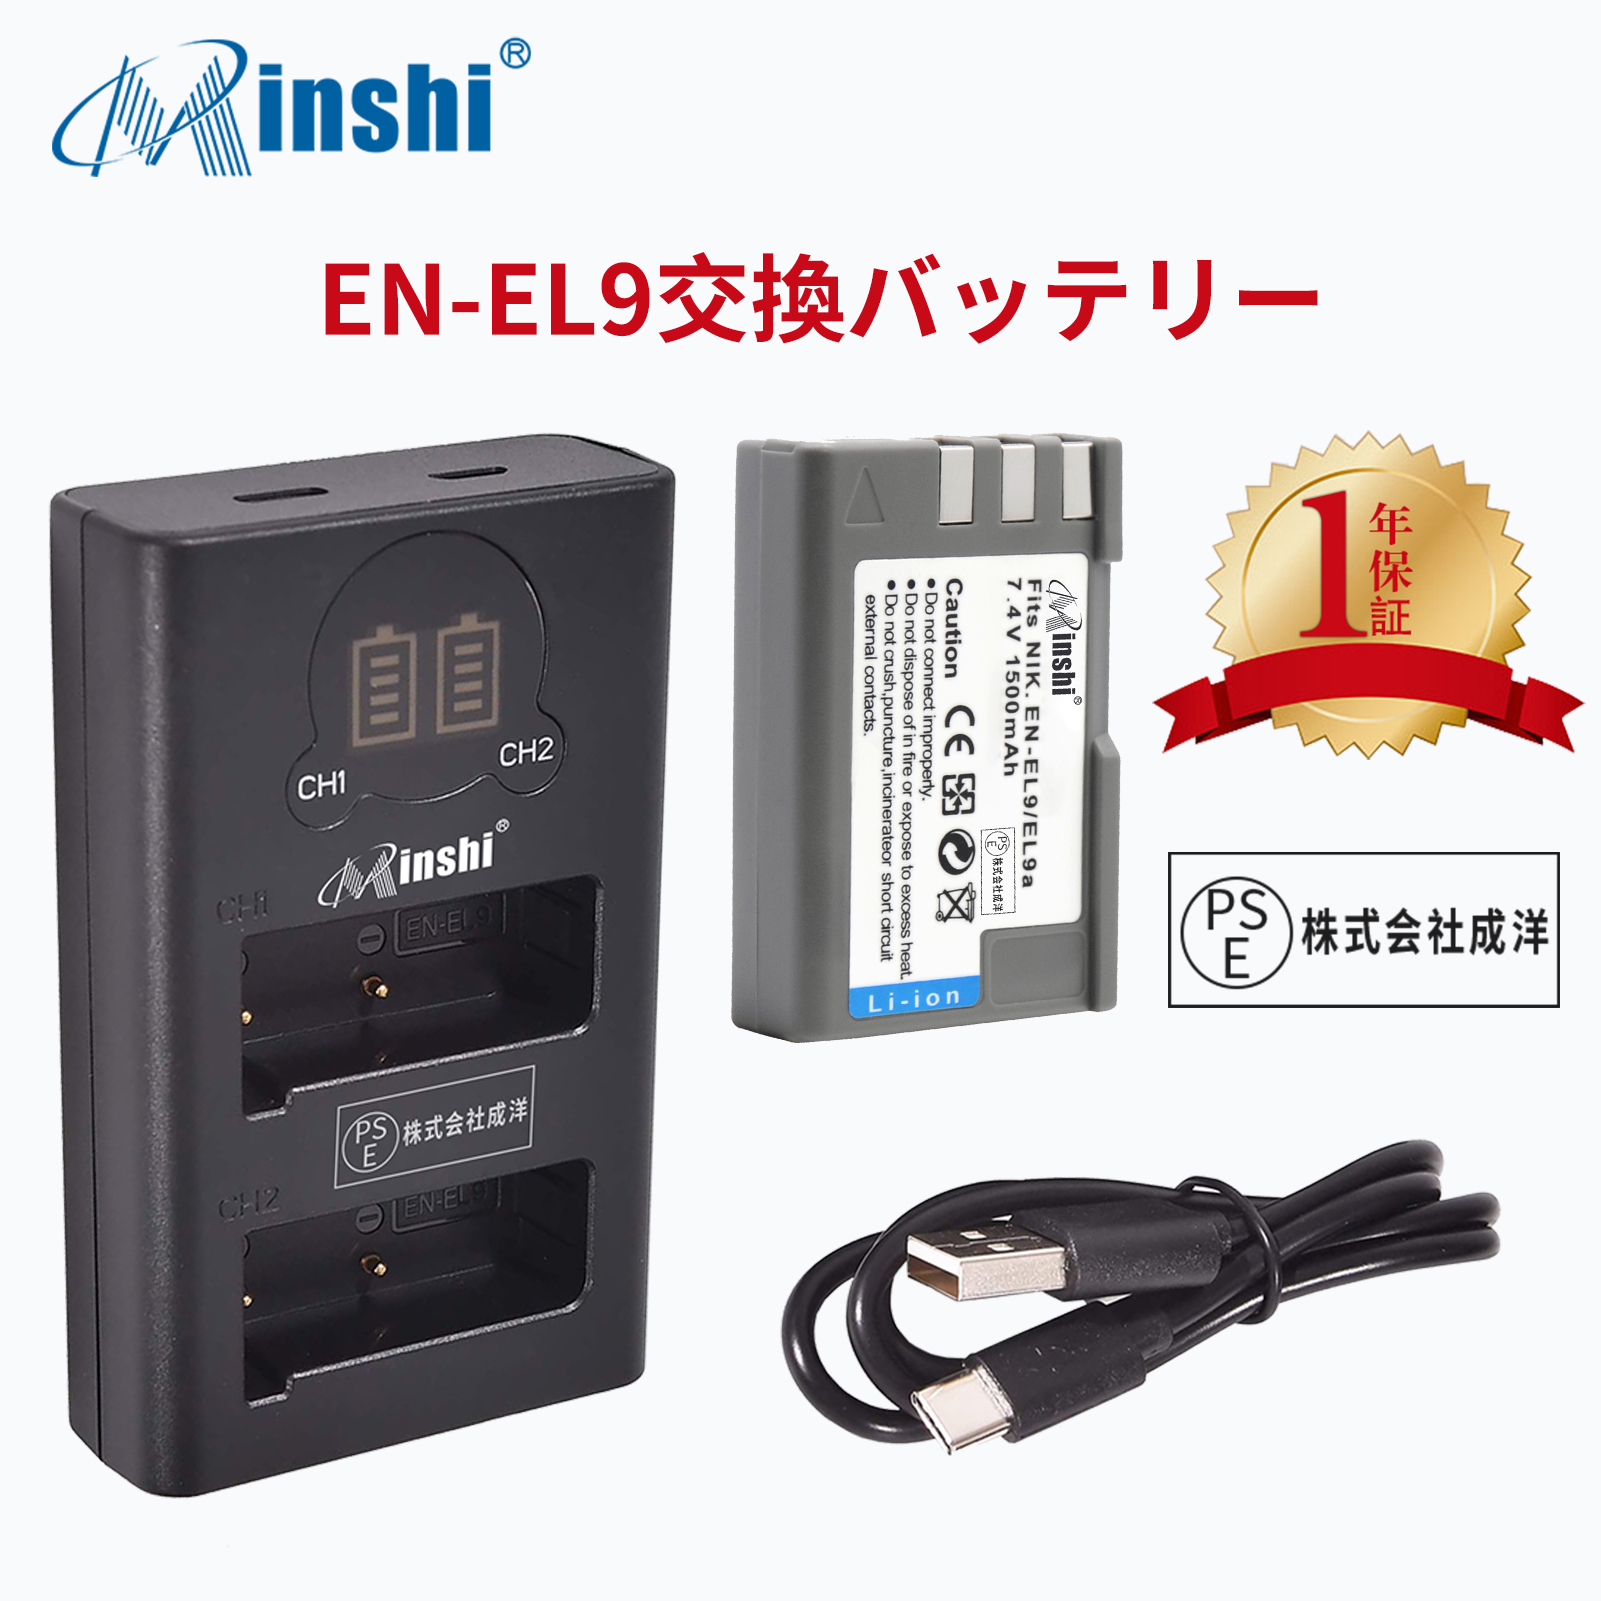 【1年保証】minshi NIKON D5000【1500mAh 7.4V】 【互換急速USBチャージャー】PSE認定済 高品質EN-EL9 EN-EL9a EN-EL9e互換バッテリーPHB